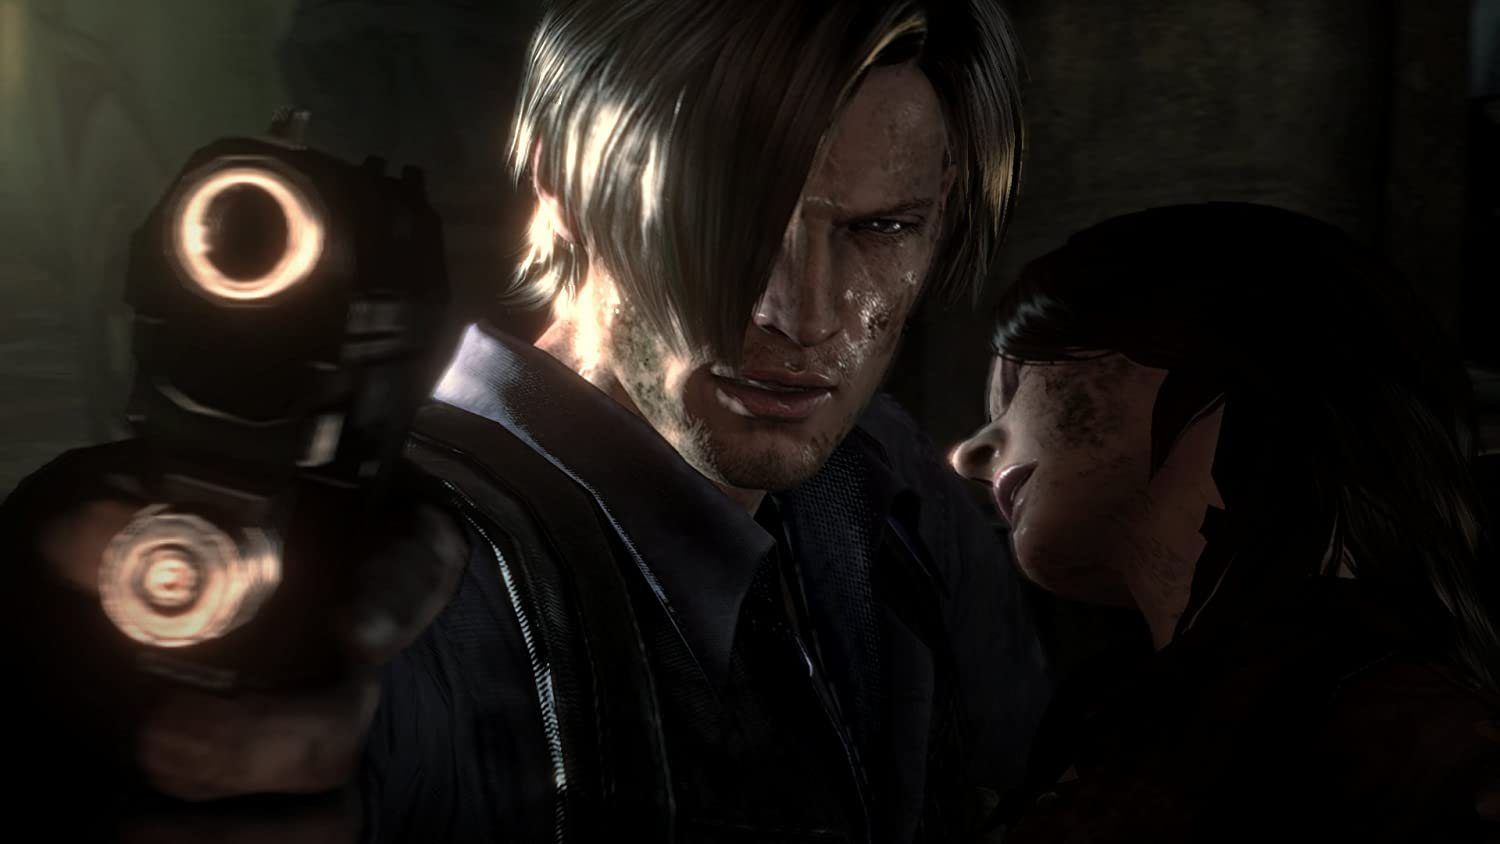 Capcom 4 Hits PlayStation Evil PS Resident 6